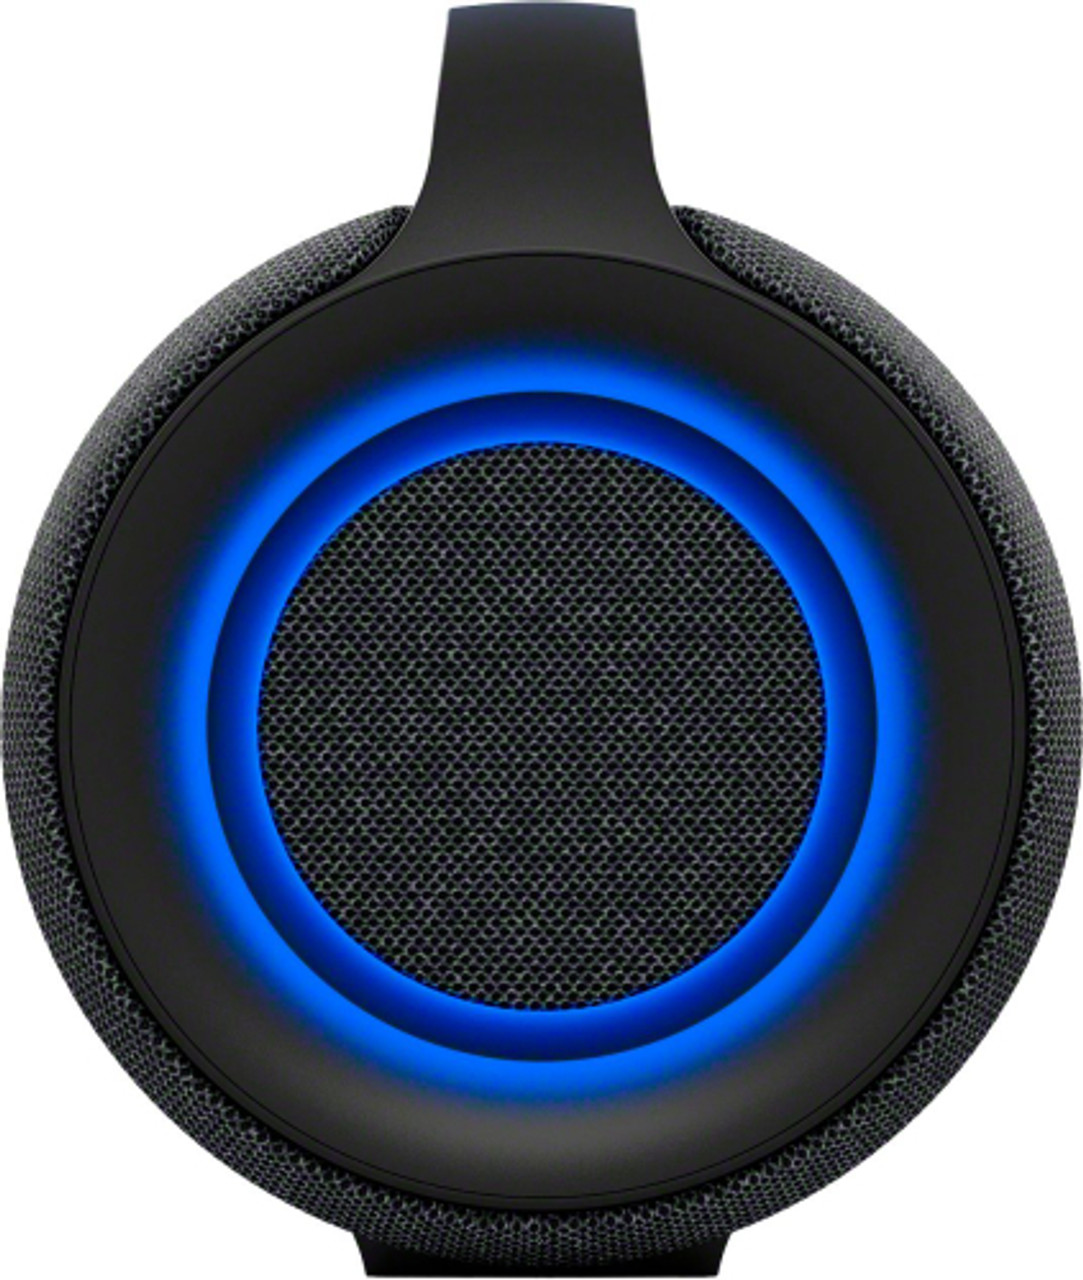 Sony - XG500 Portable Bluetooth Speaker - Black